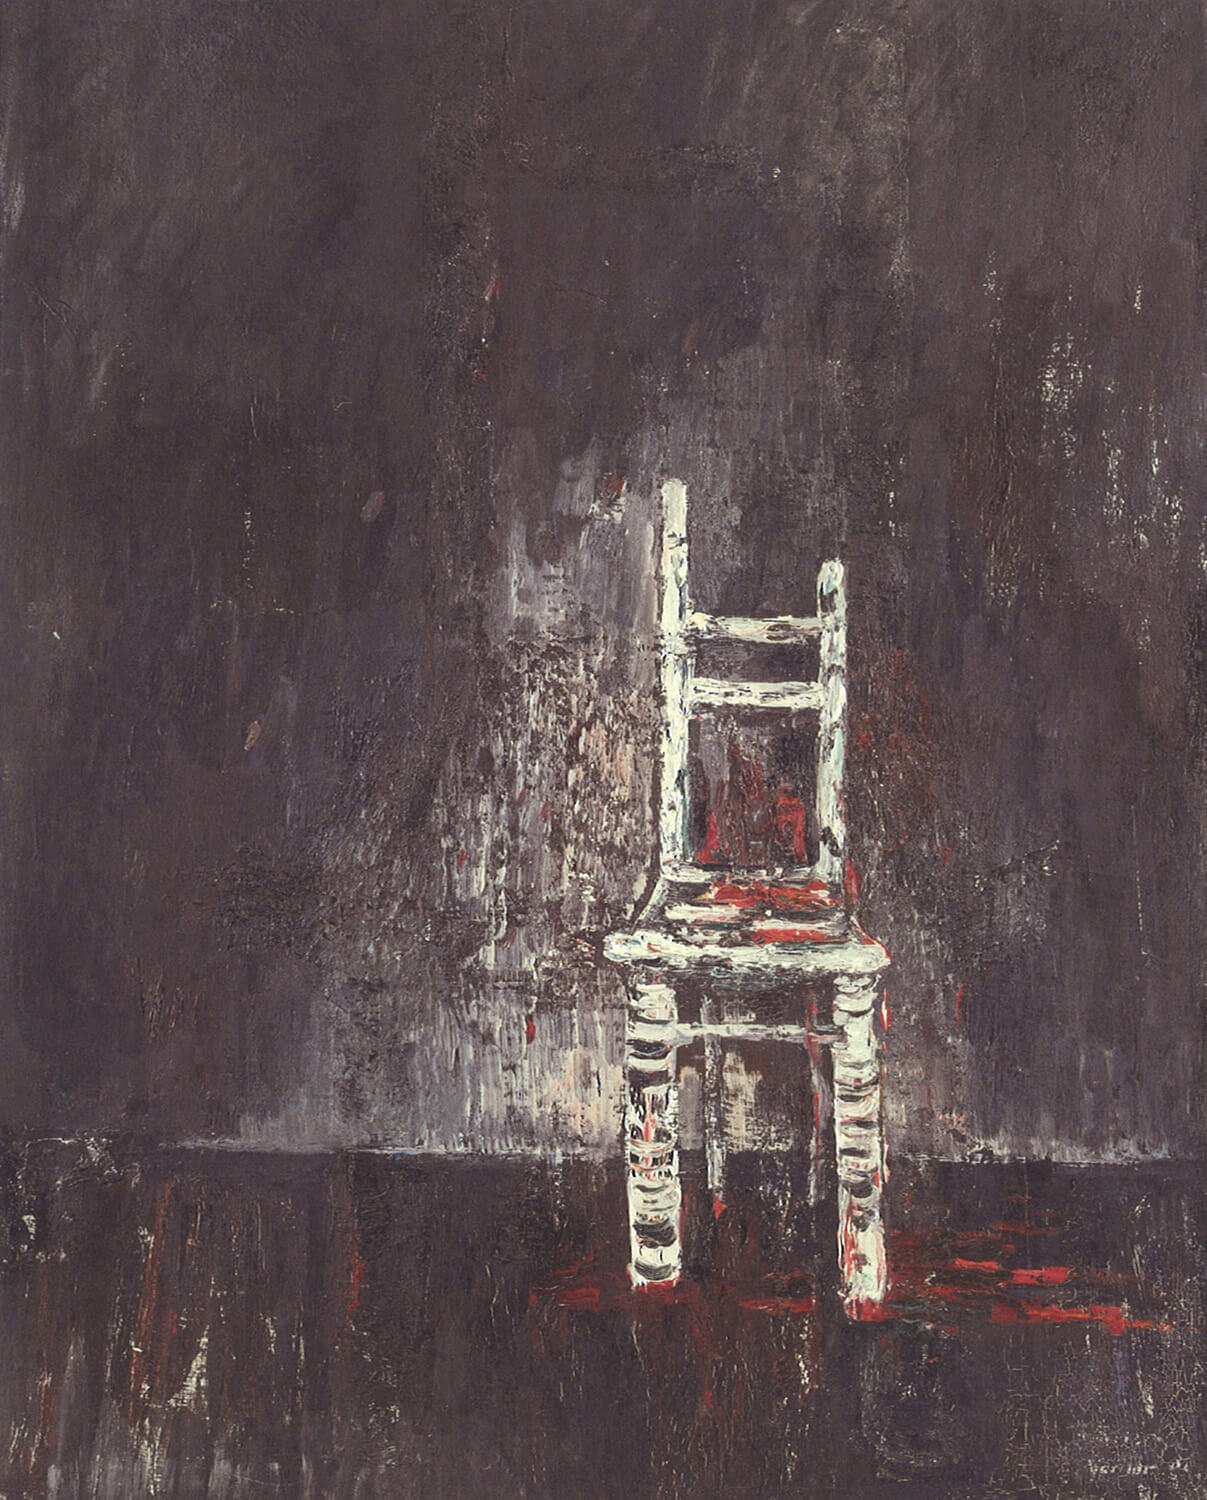 Ralf Kerbach, The Interrogation, 1984, oil on canvas, 150 x 120.5 cm